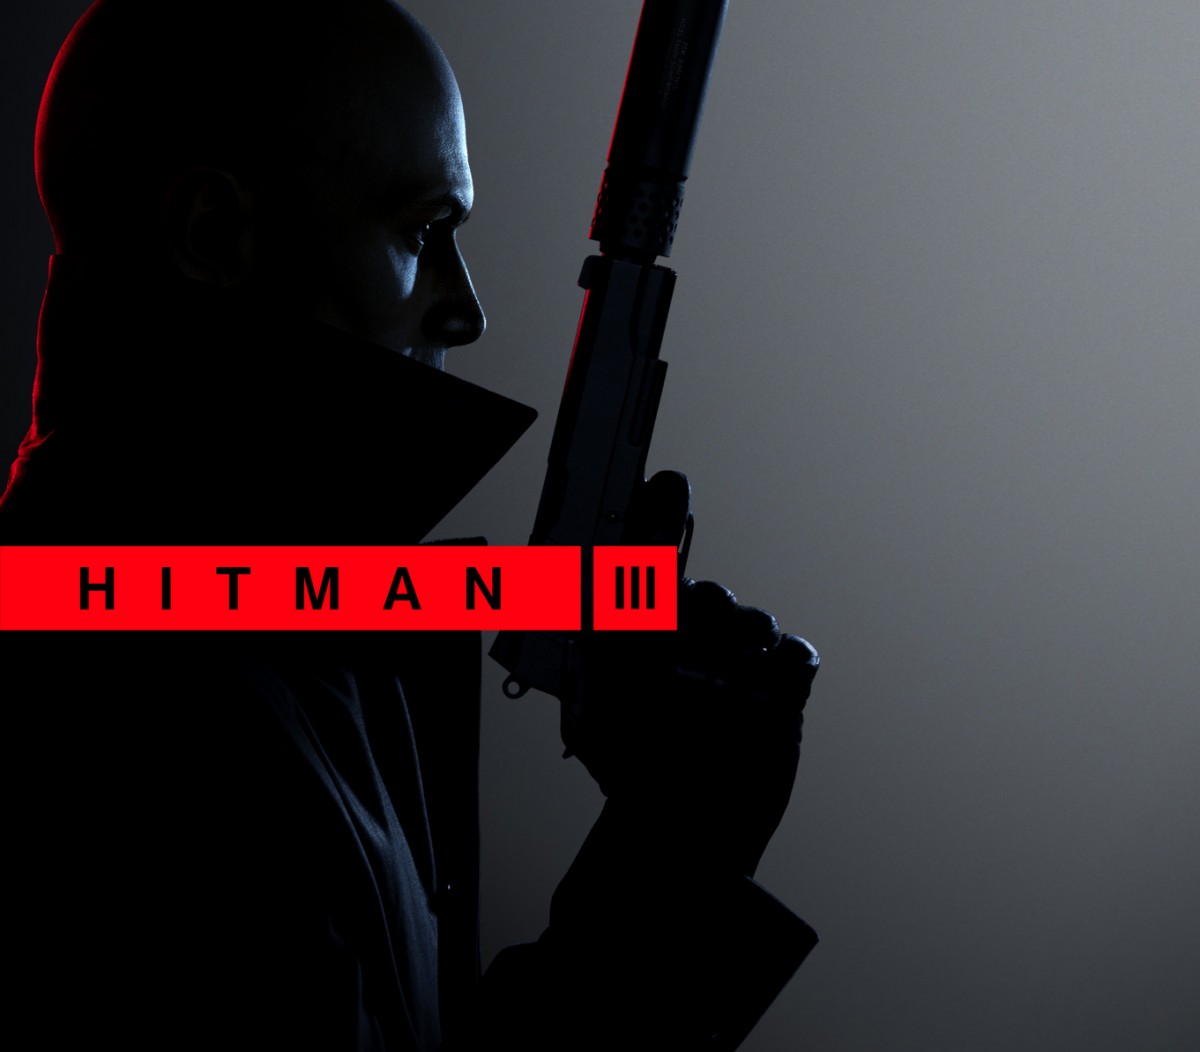 Le jeu Hitman 3 profitera de la technologie Ray Tracing